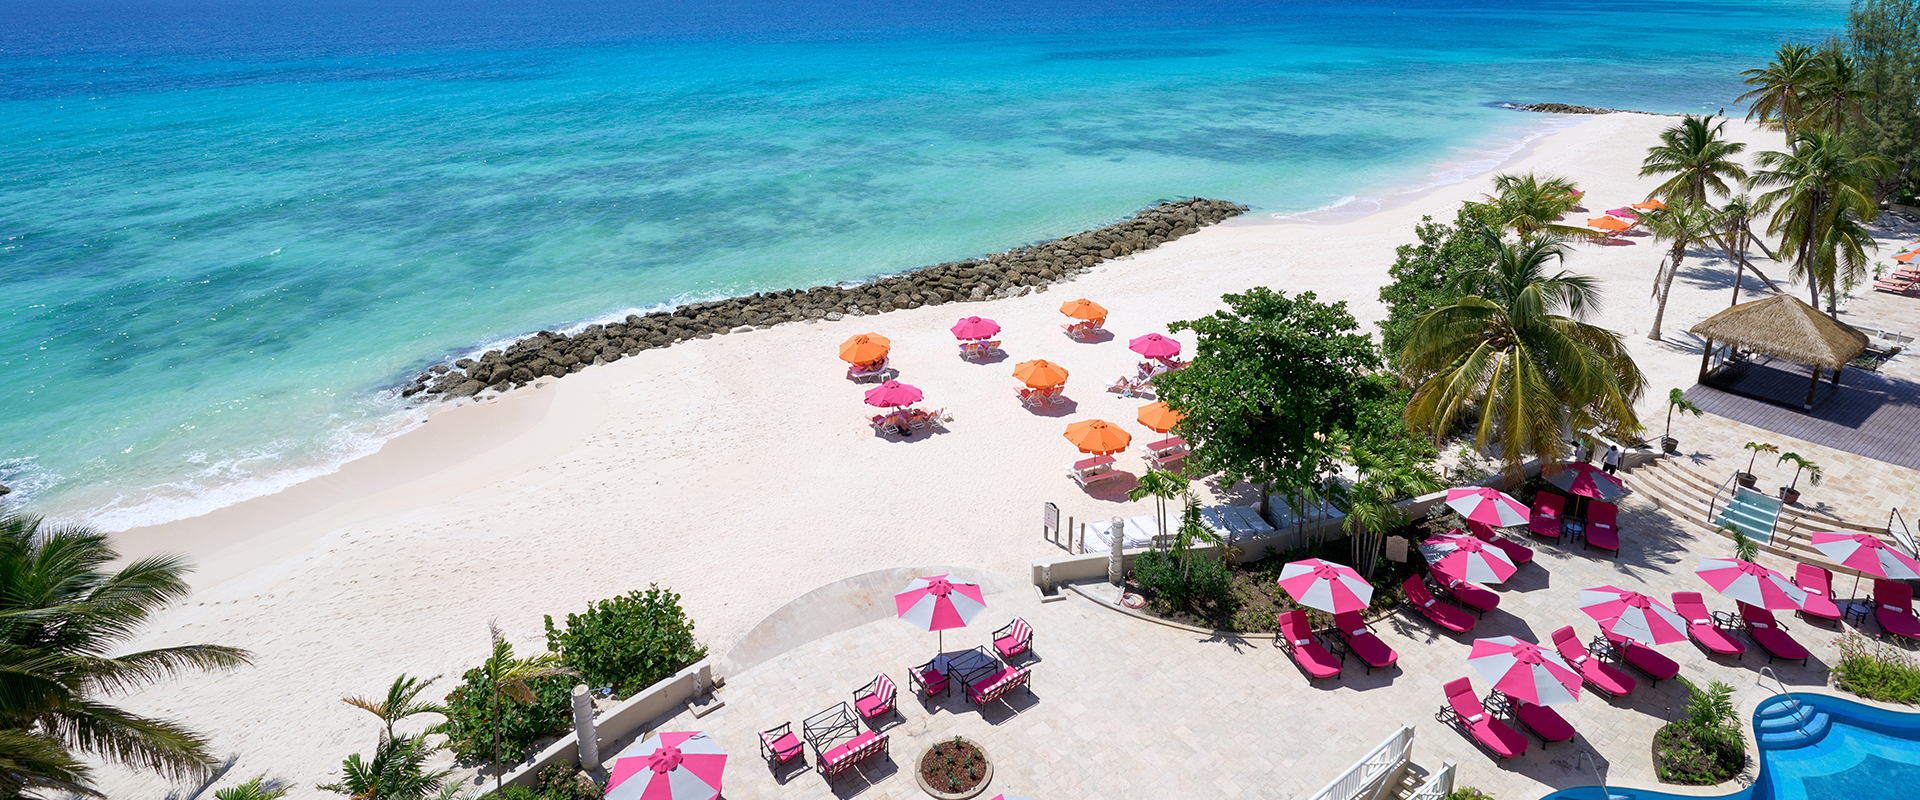 pink sun umbrellas and beach view